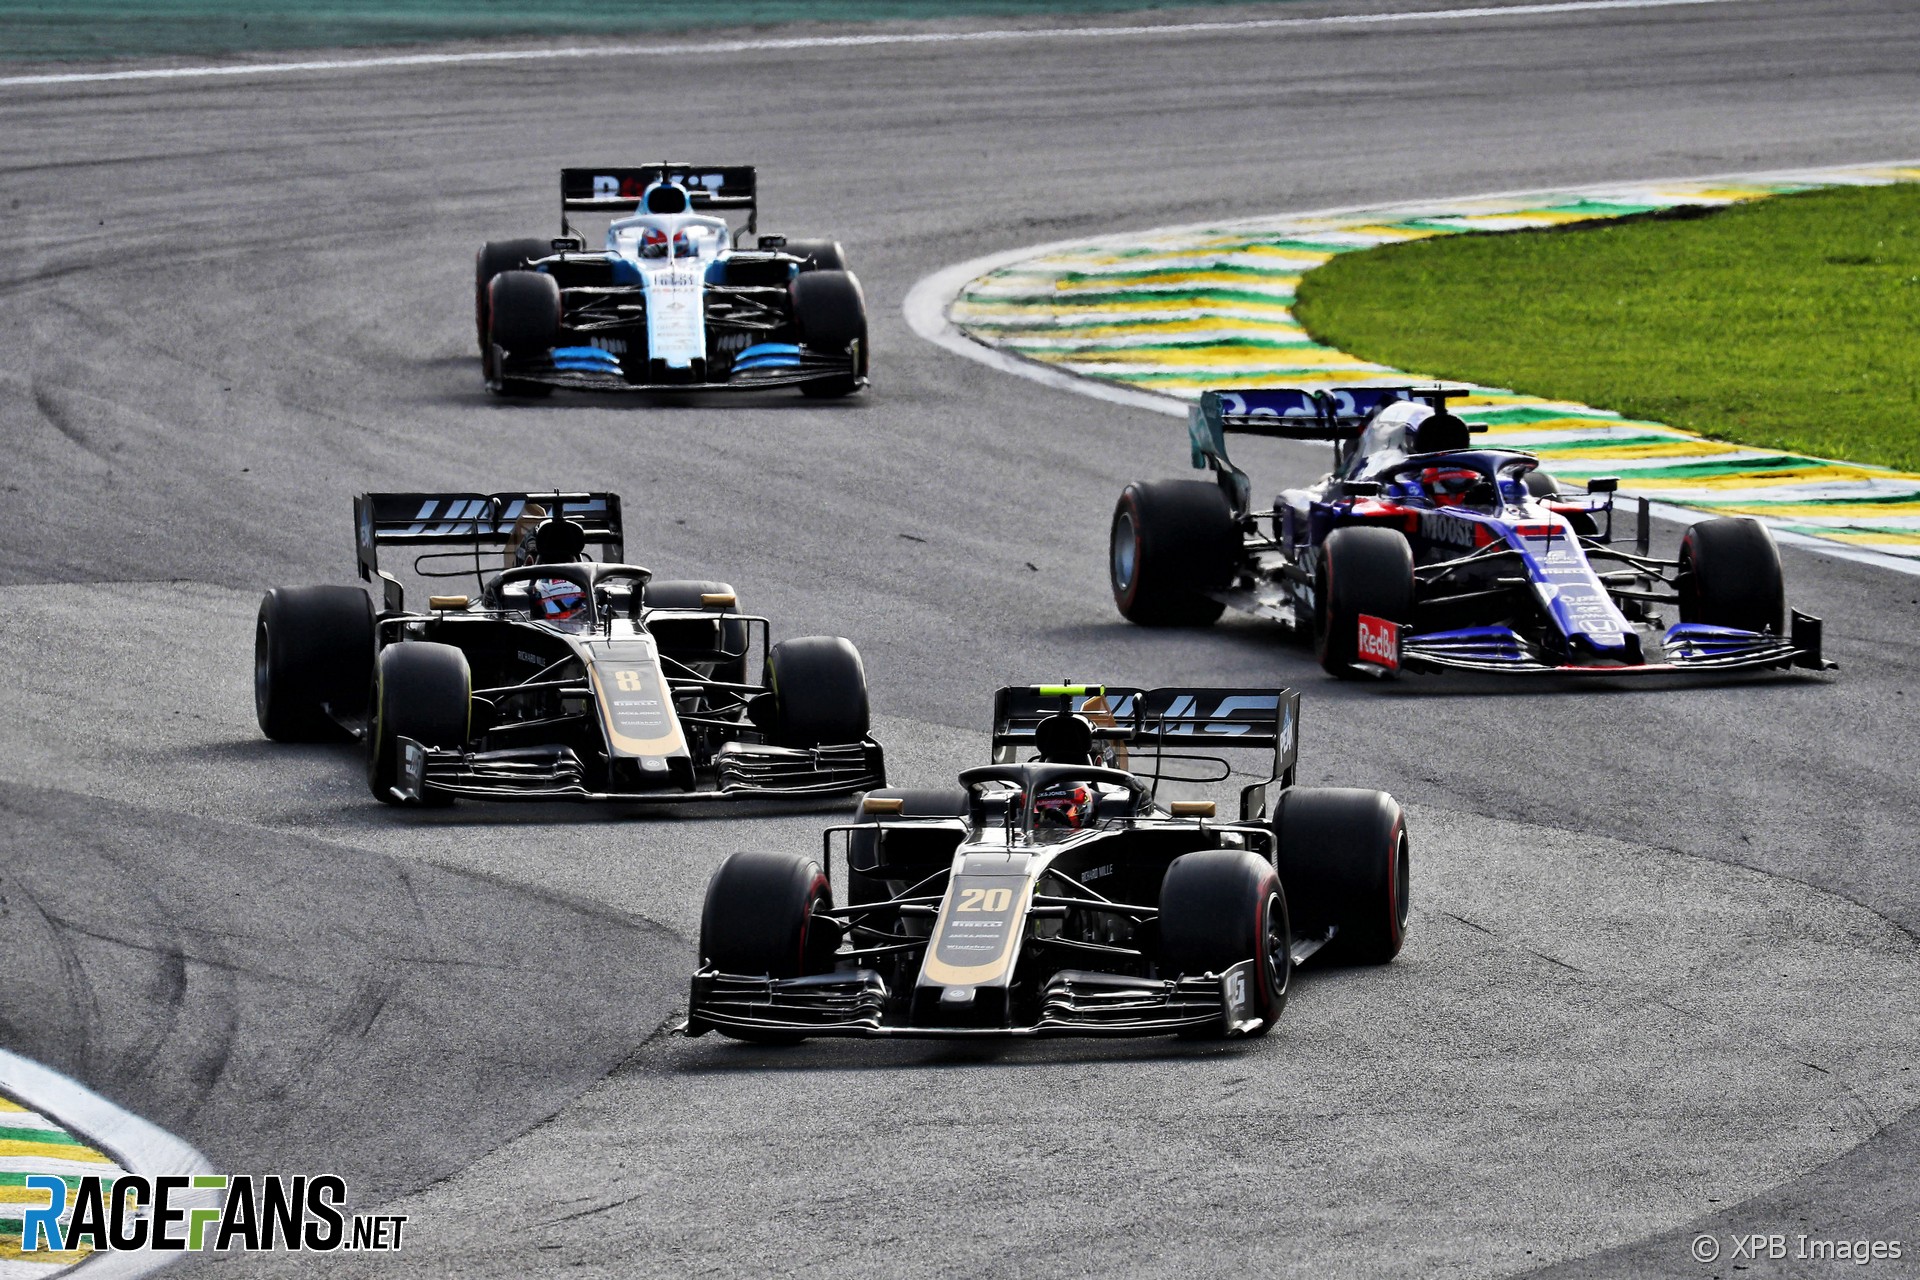 Kevin Magnussen, Haas, Interlagos, 2019